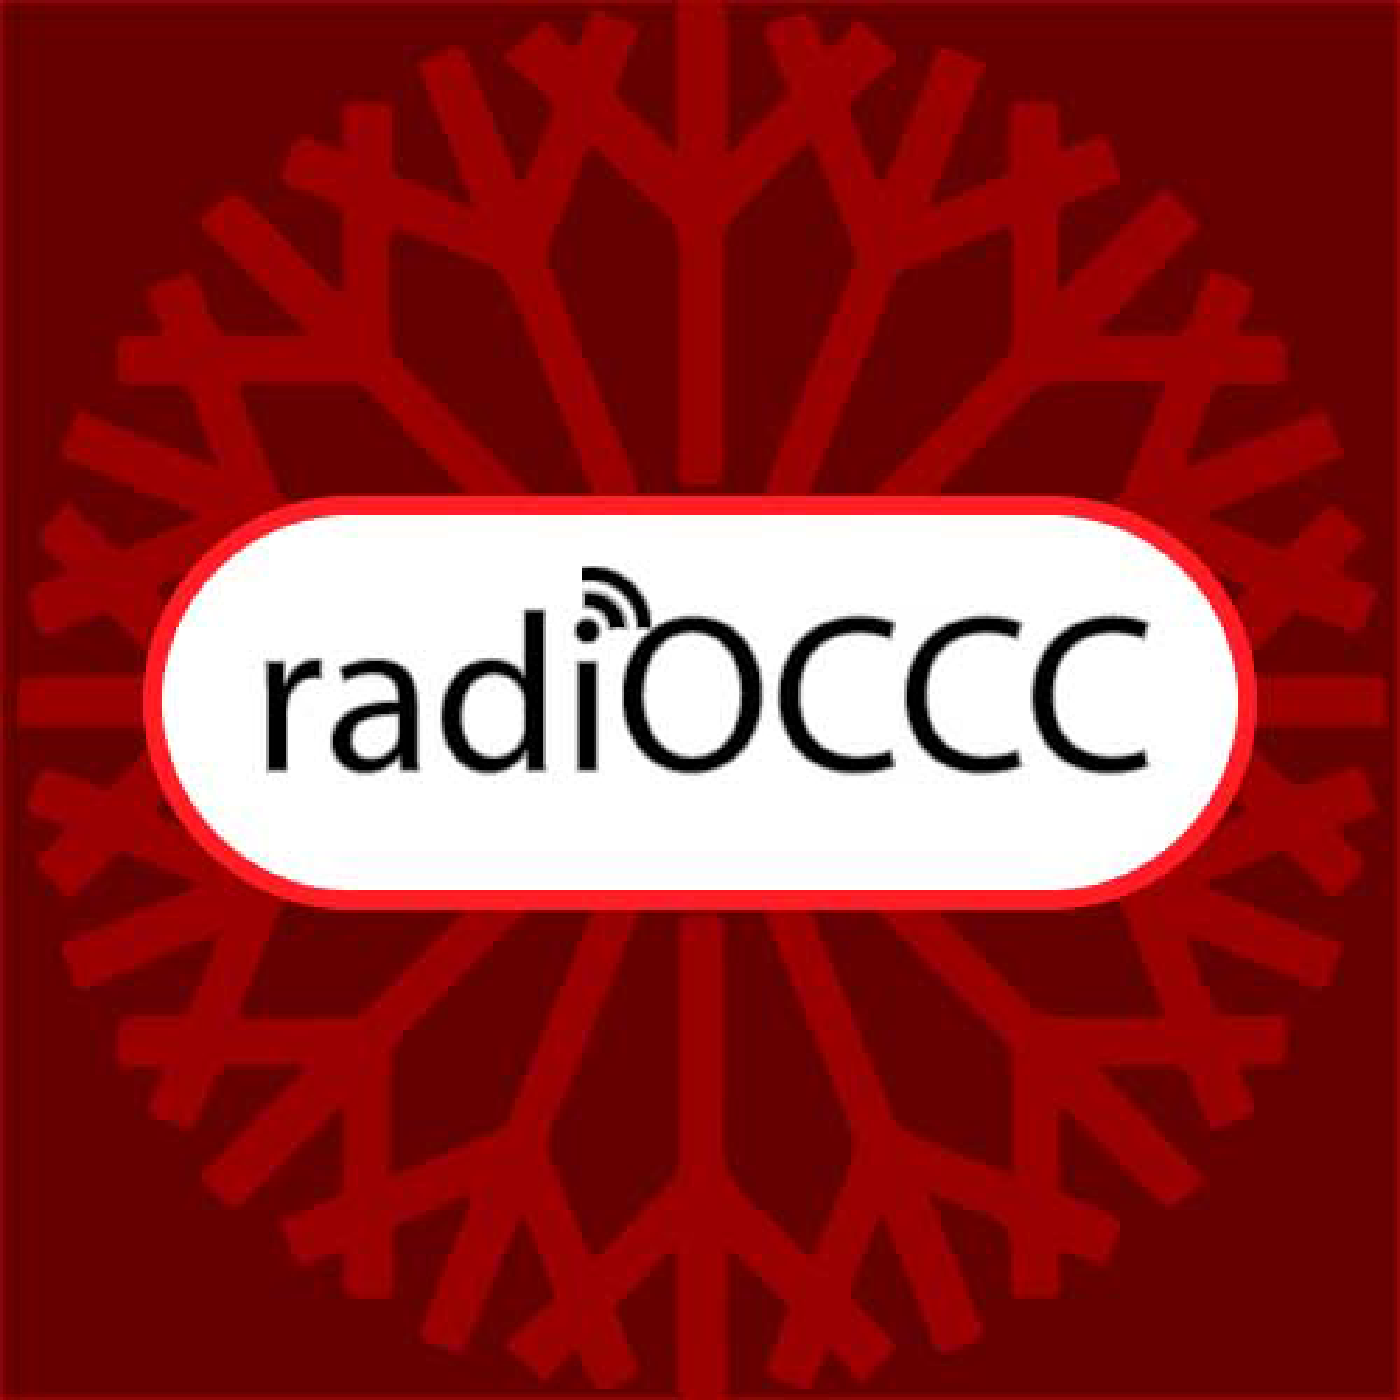 RadiOCCC logo